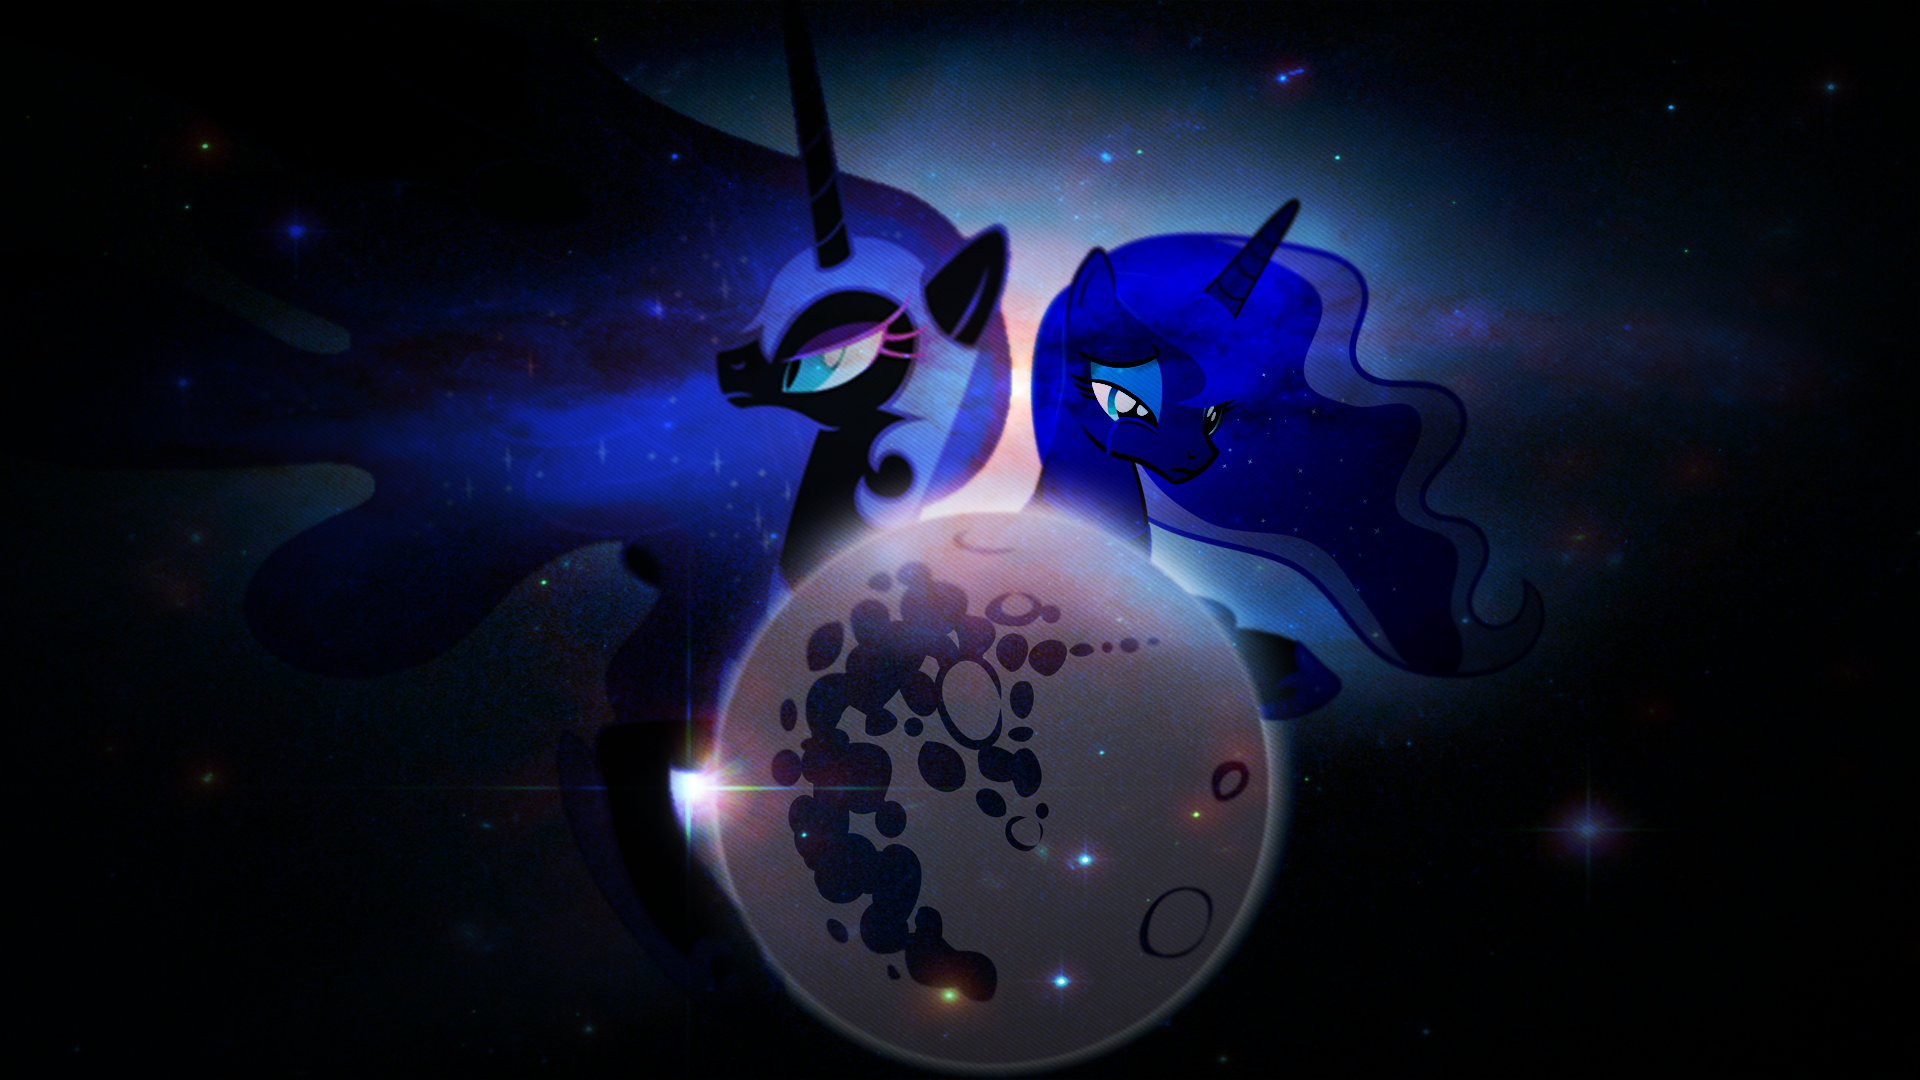 MLP:FiM Princess Luna and Nightmare Moon Wallpaper by Proenix, Stabzor, TigresToku and Zoxxiify